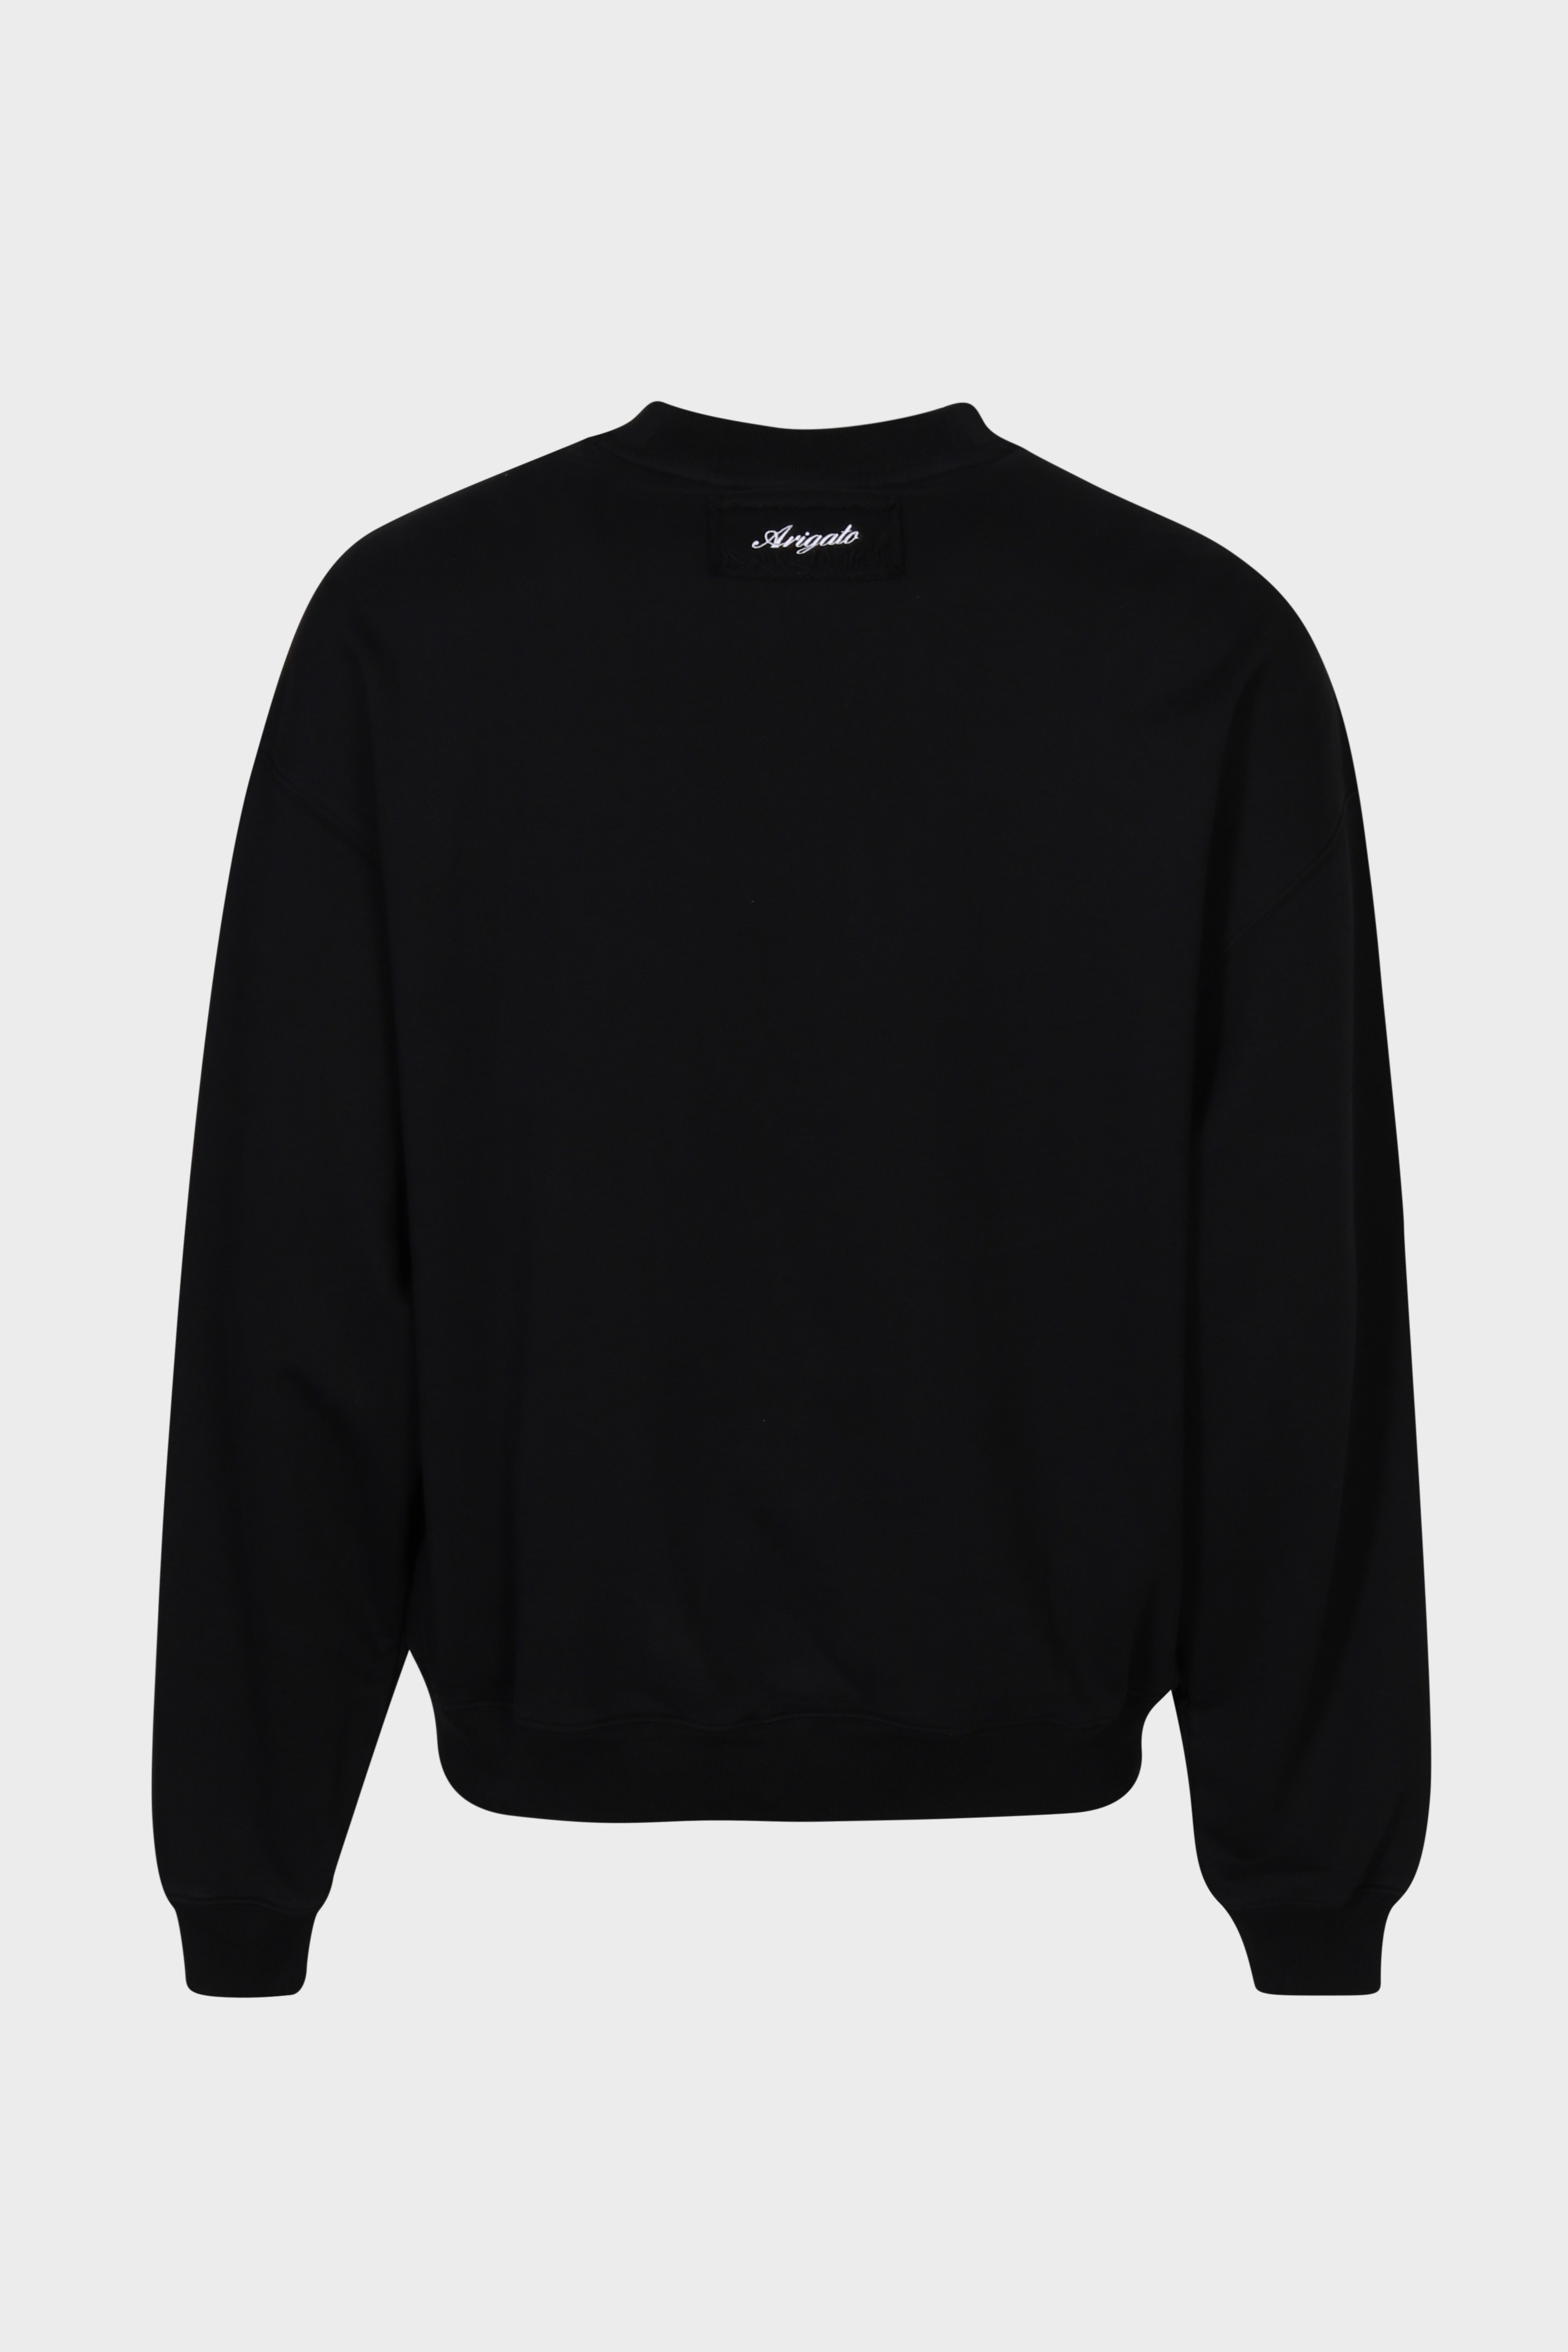 AXEL ARIGATO Vista Distressed Sweatshirt in Black